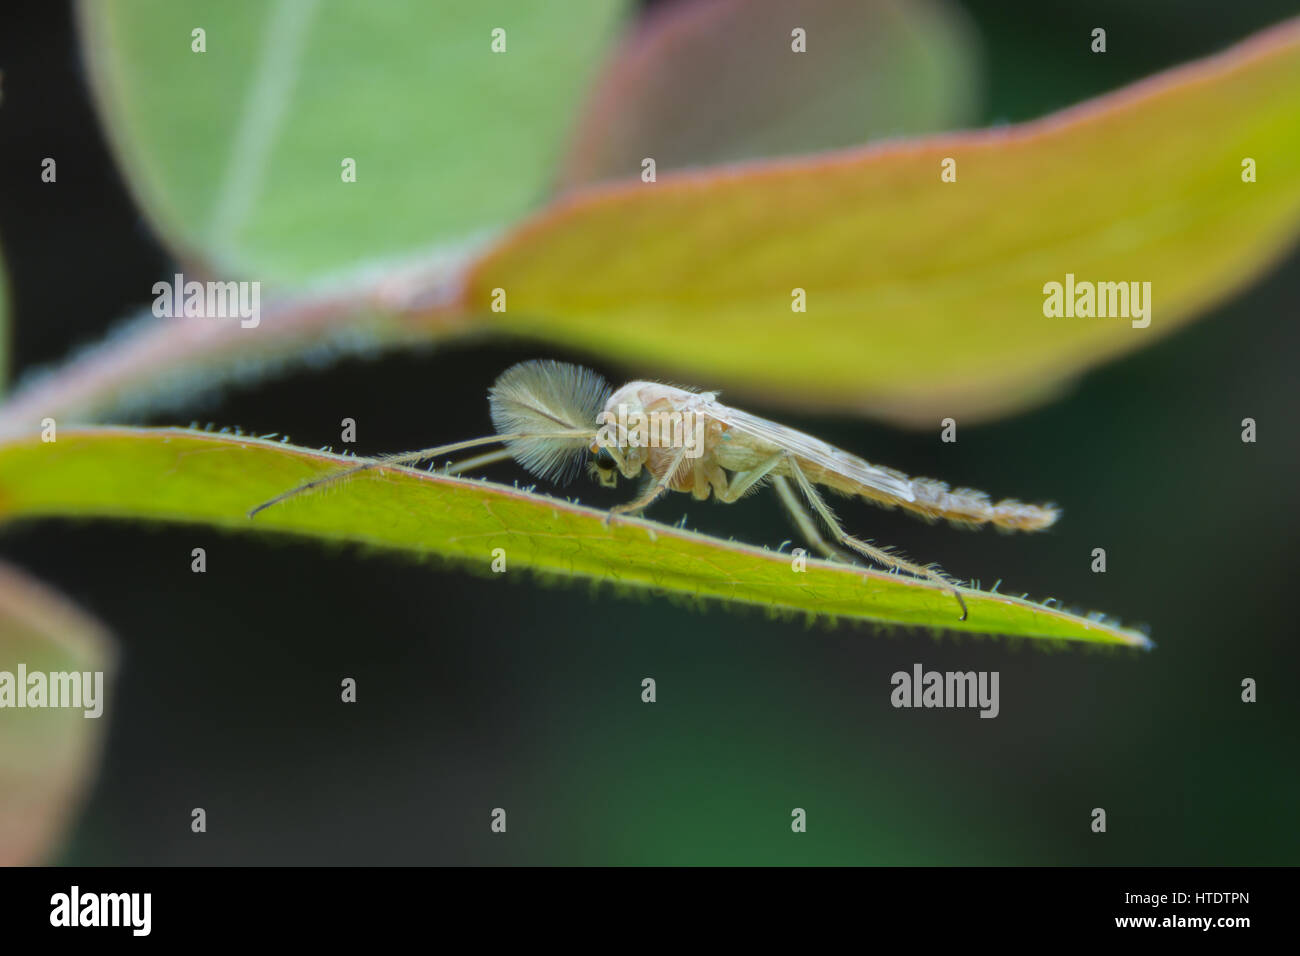 Adult male midge (Chironomidae) Close up. Super Macro Stock Photo